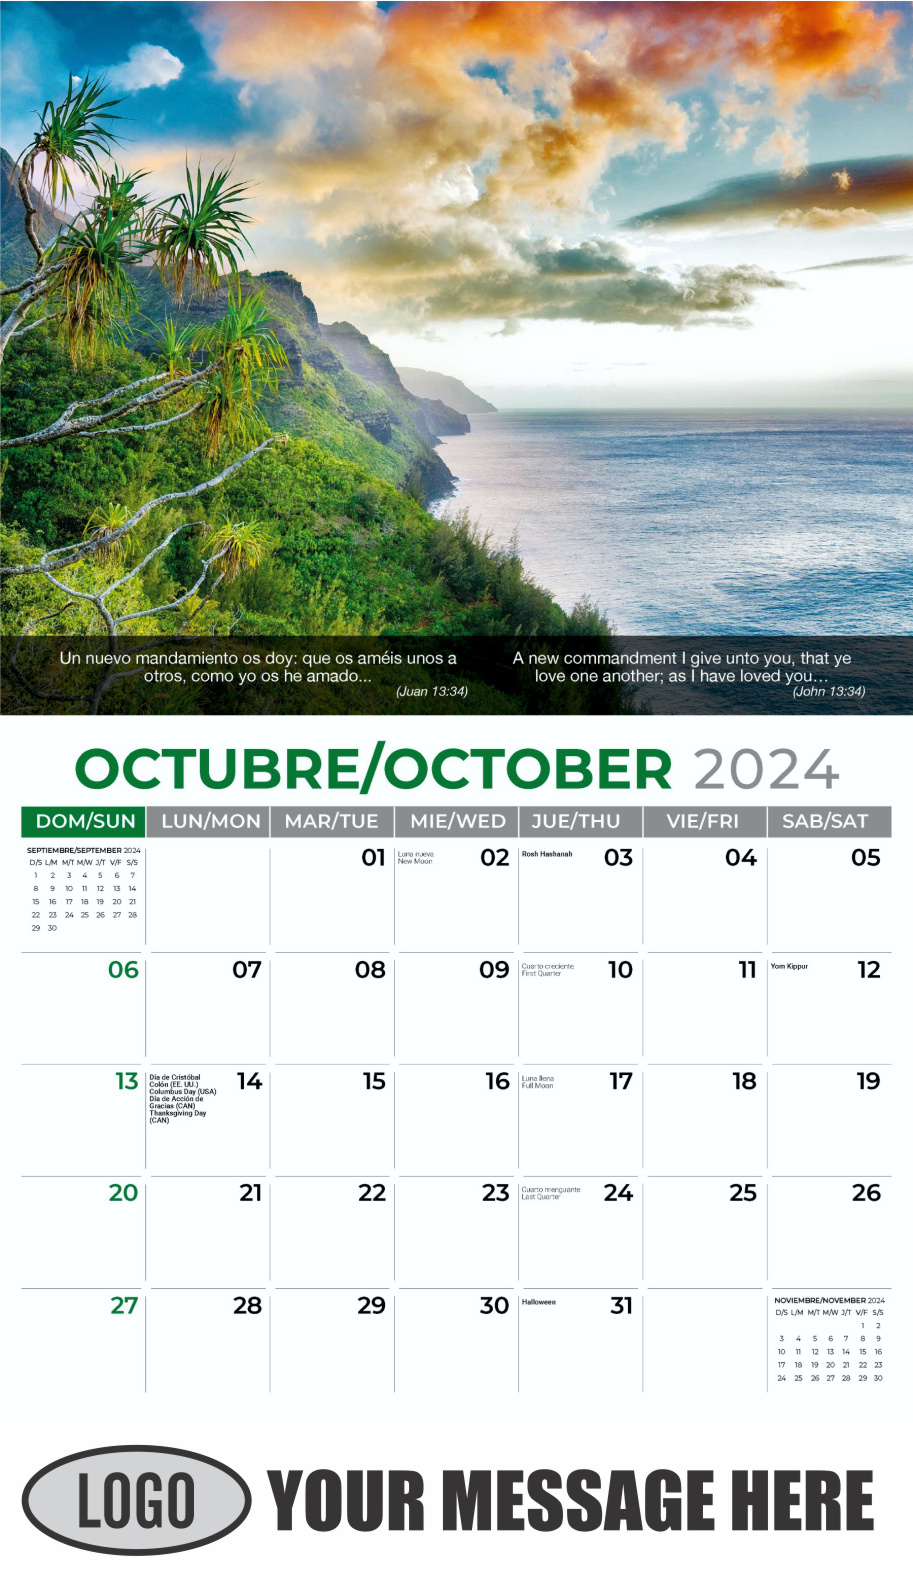 Faith Passages 2024 Bilingual Christian Faith Business Promotional Calendar - October